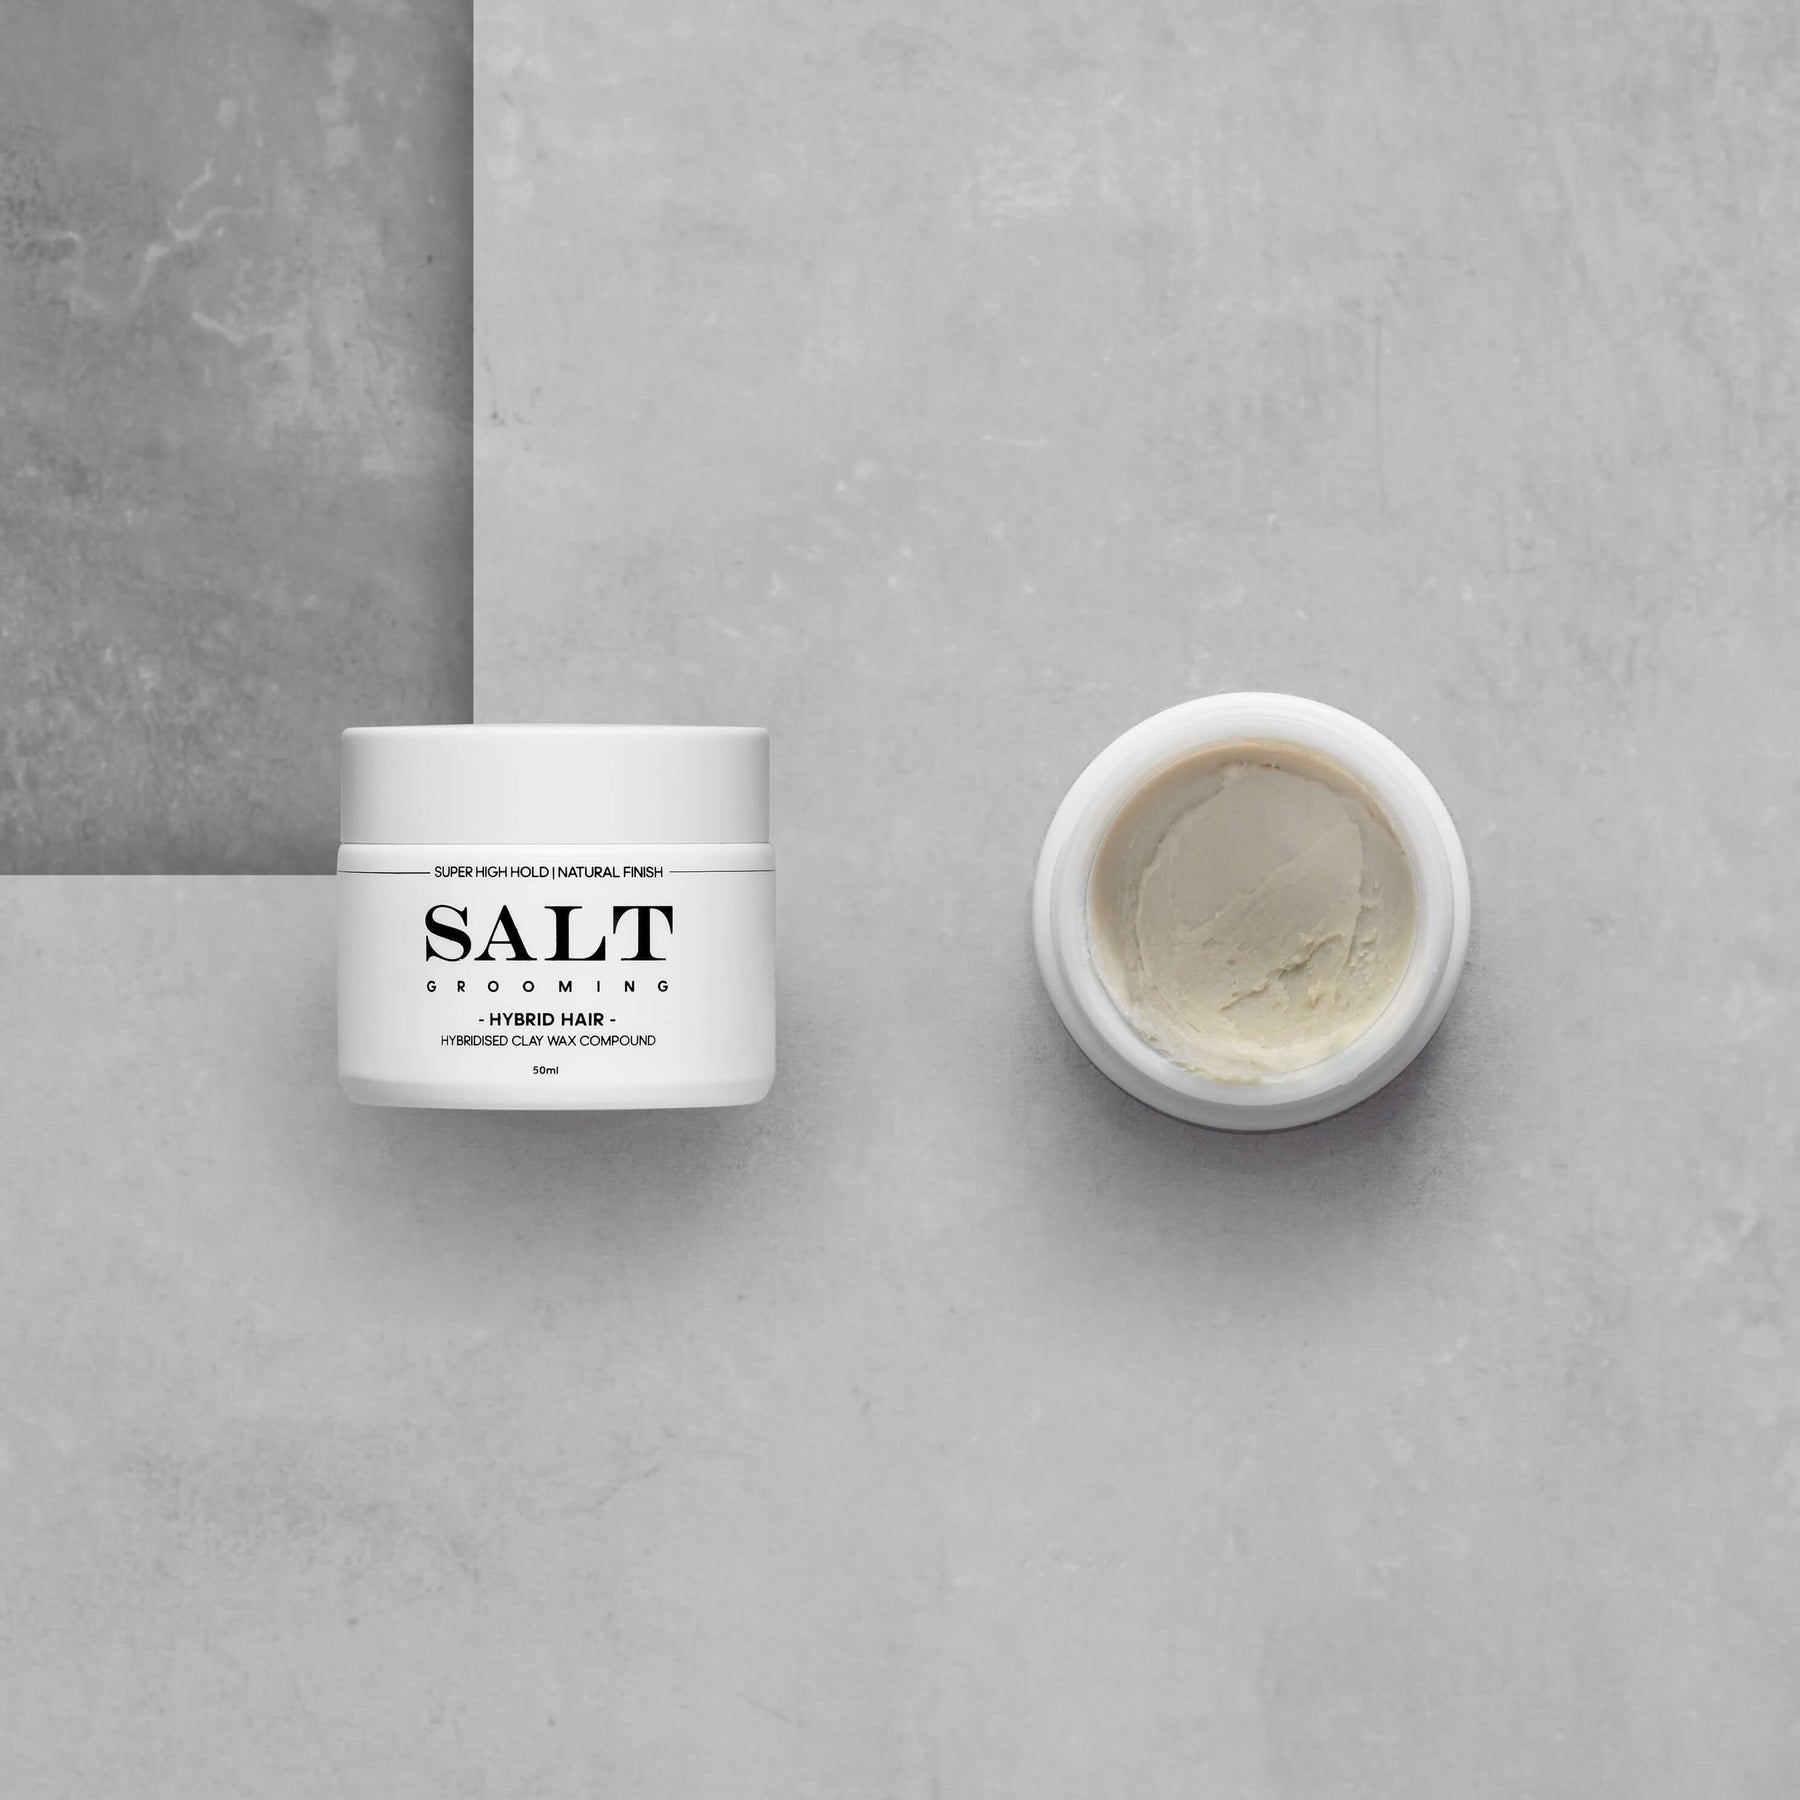 Salt Grooming Hybrid Hair - Premium organic clay wax hybrid styling compound for men